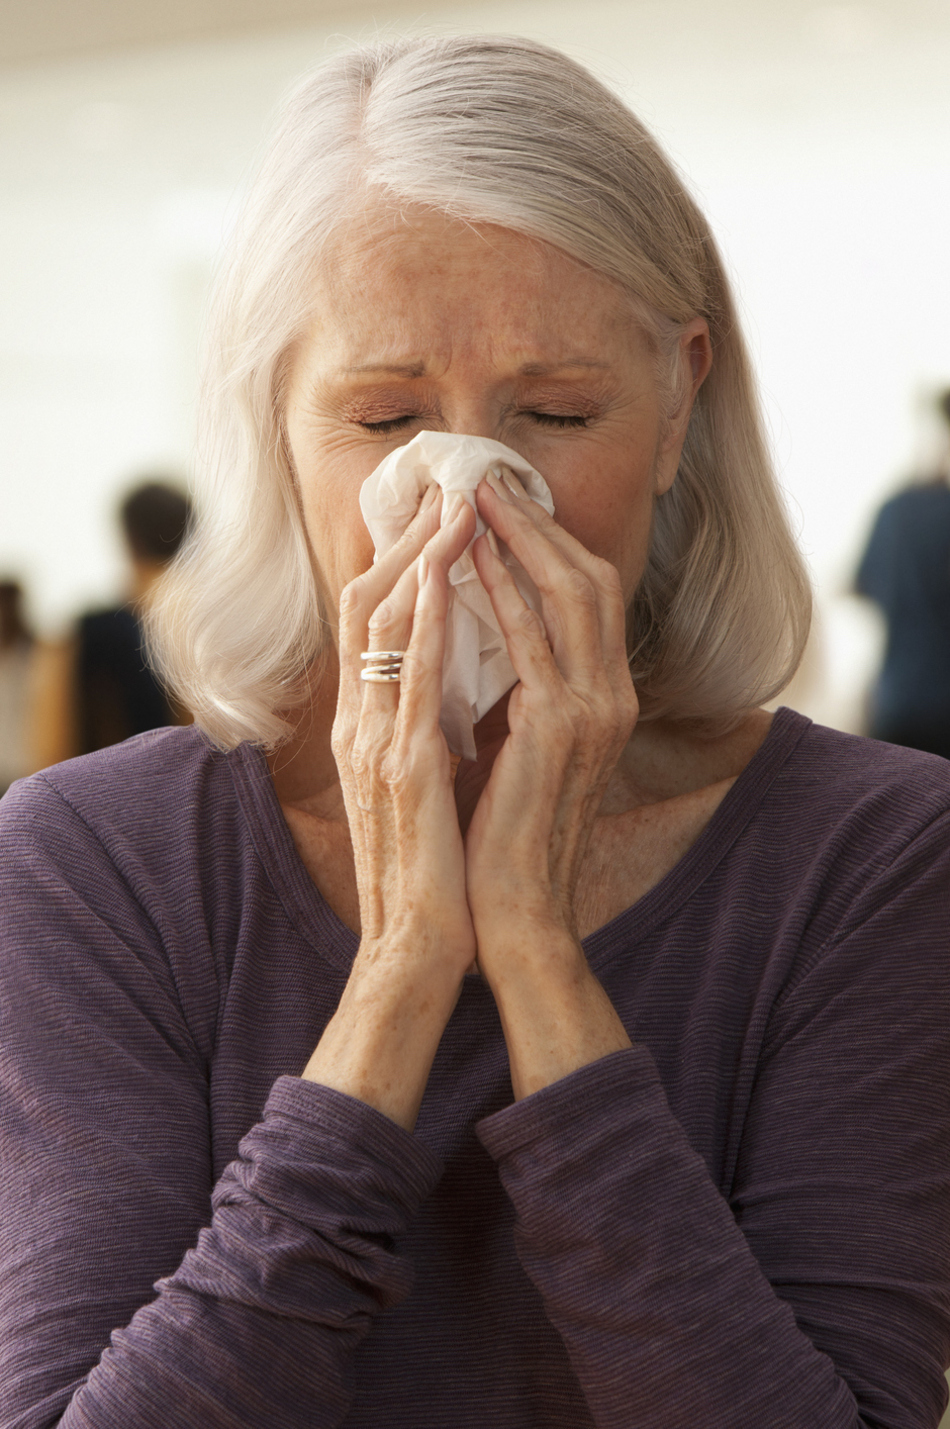 How to Relieve Allergy Symptoms